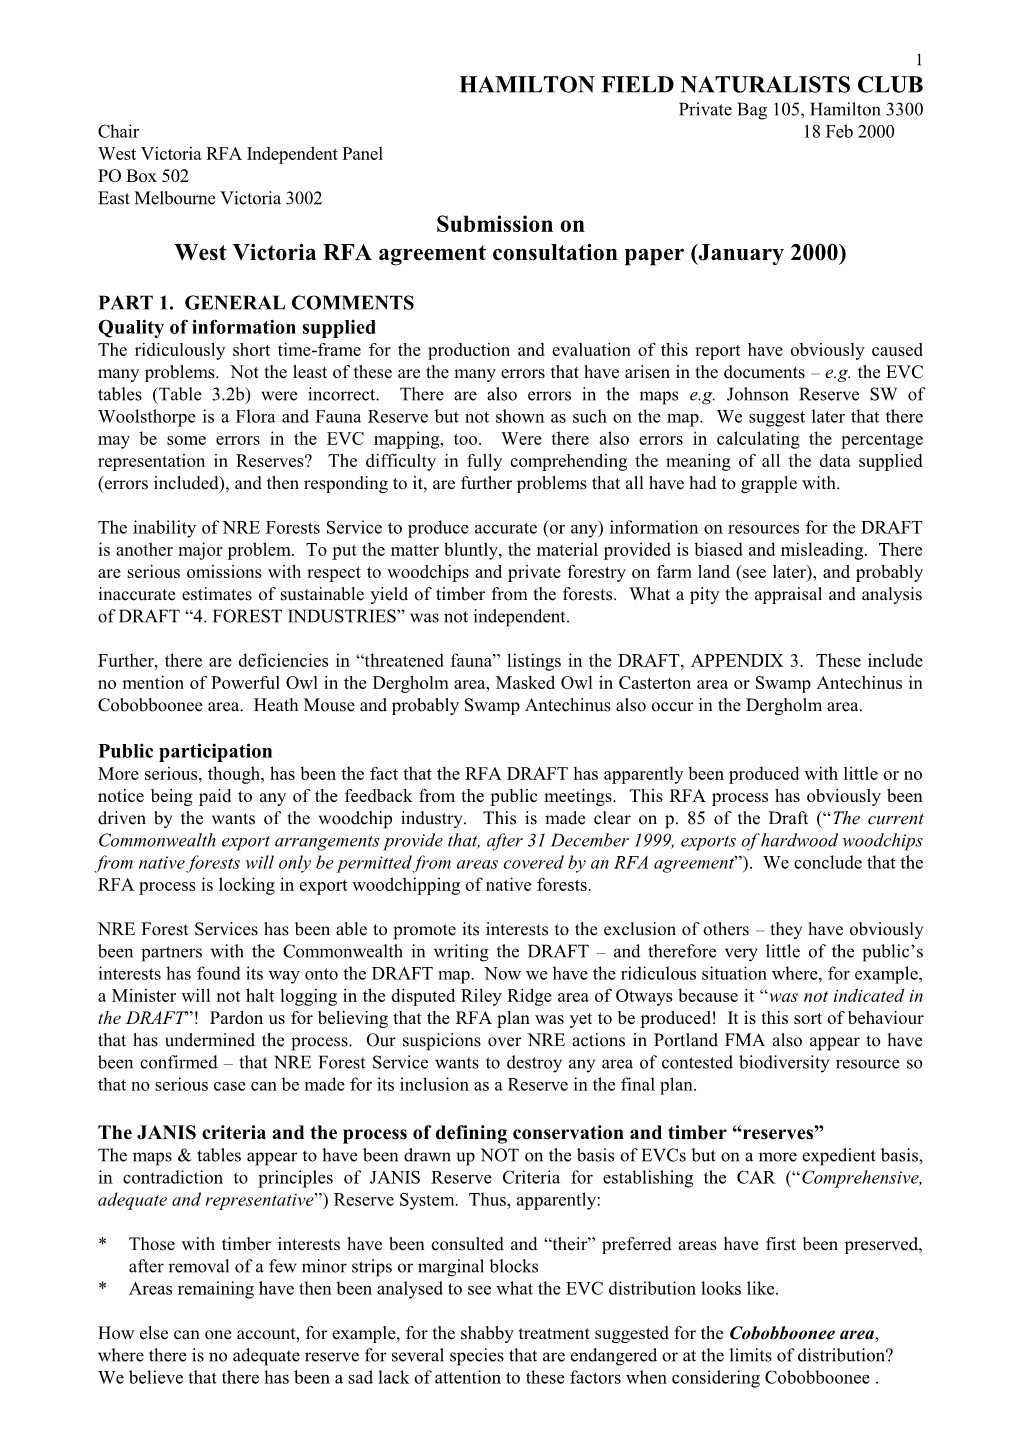 RFA Western Victorian Agreement Jan 2000